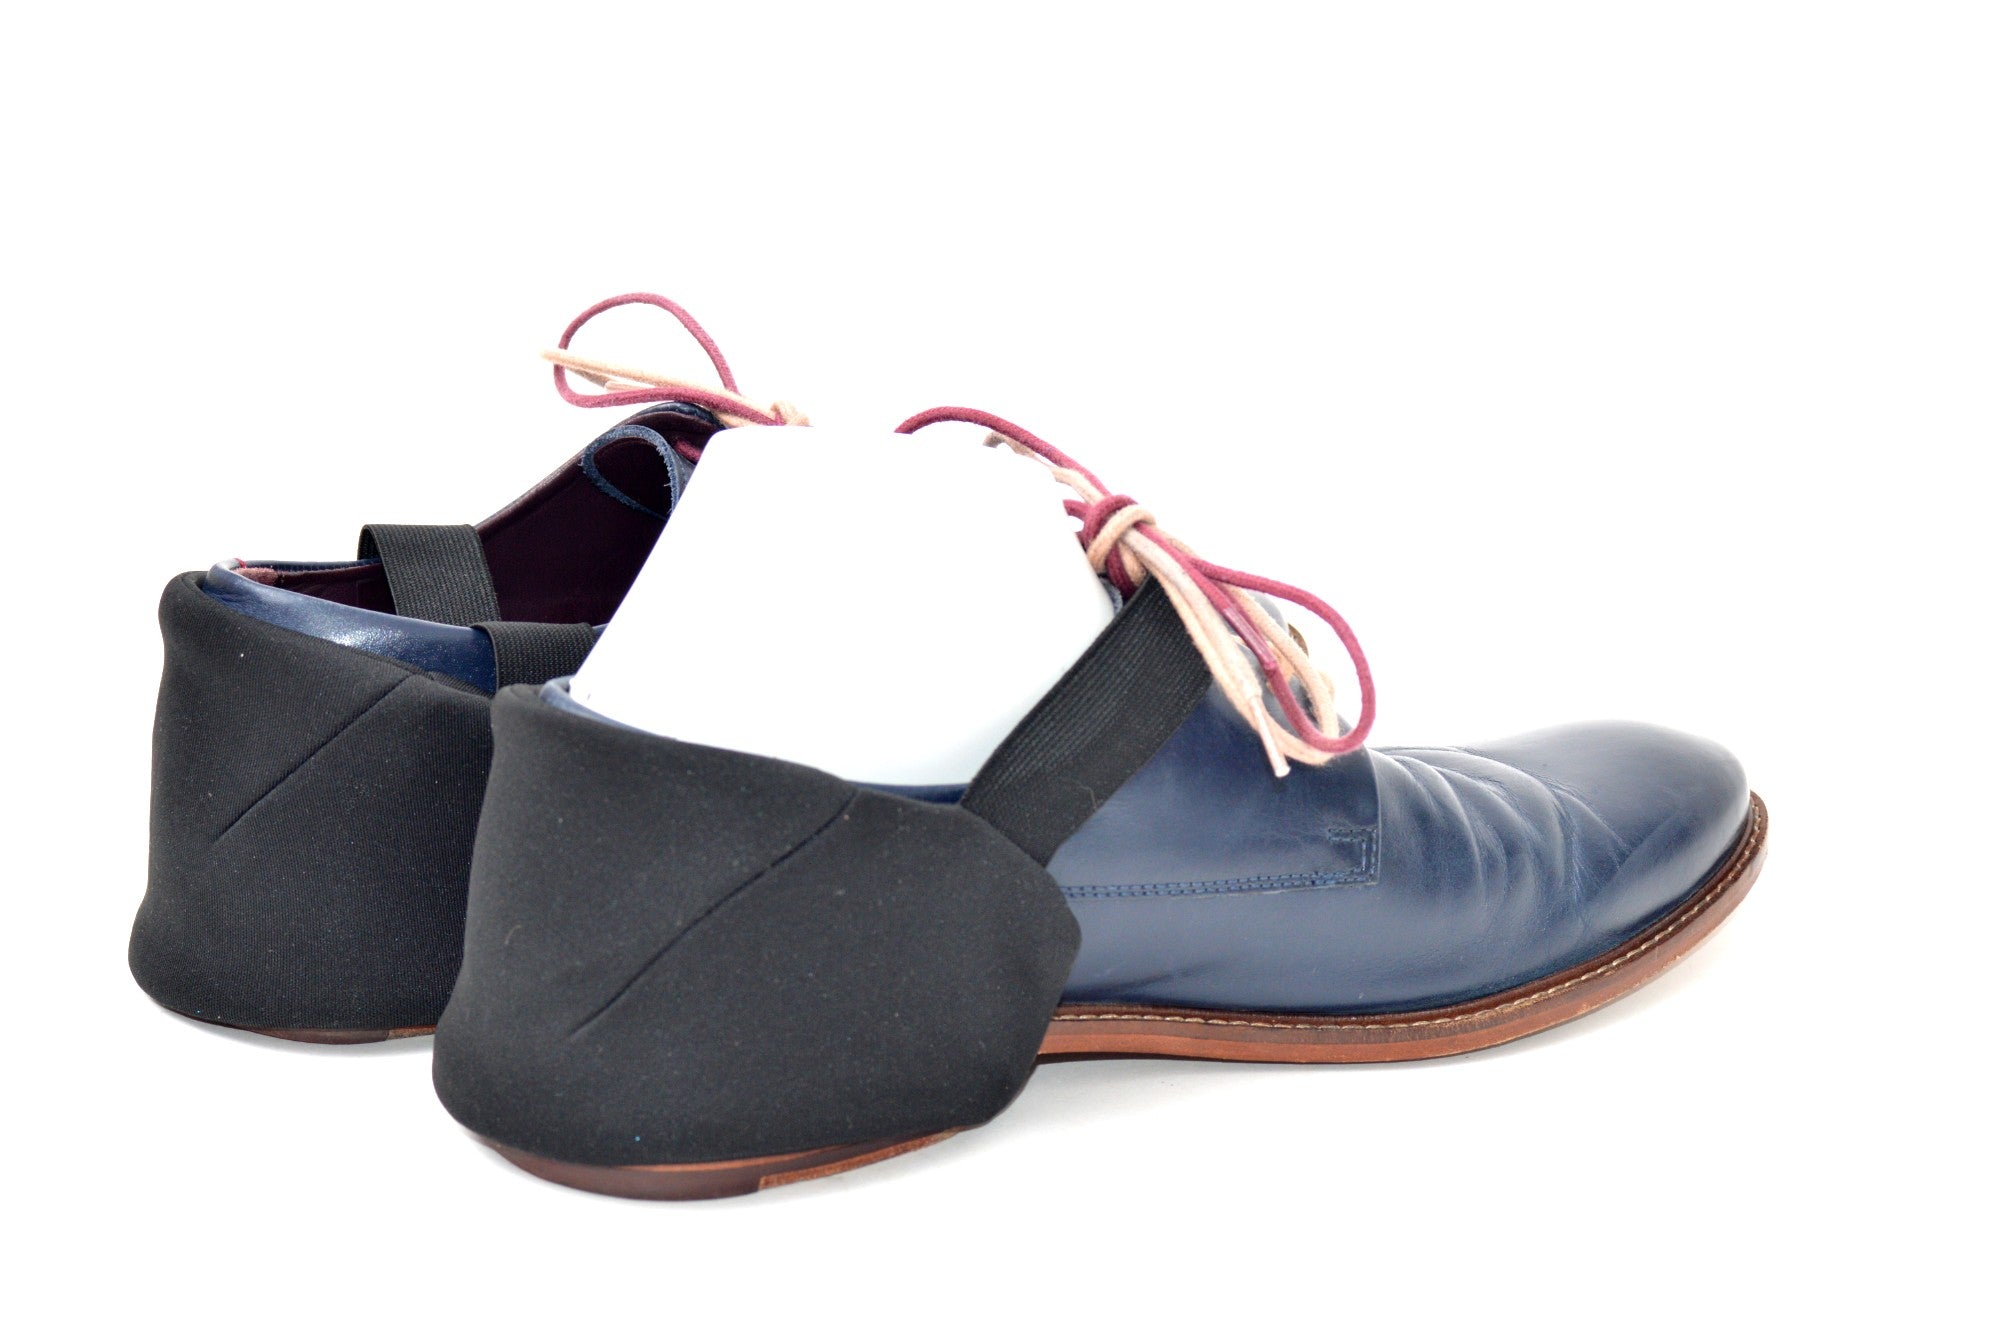 heel pads for men's shoes